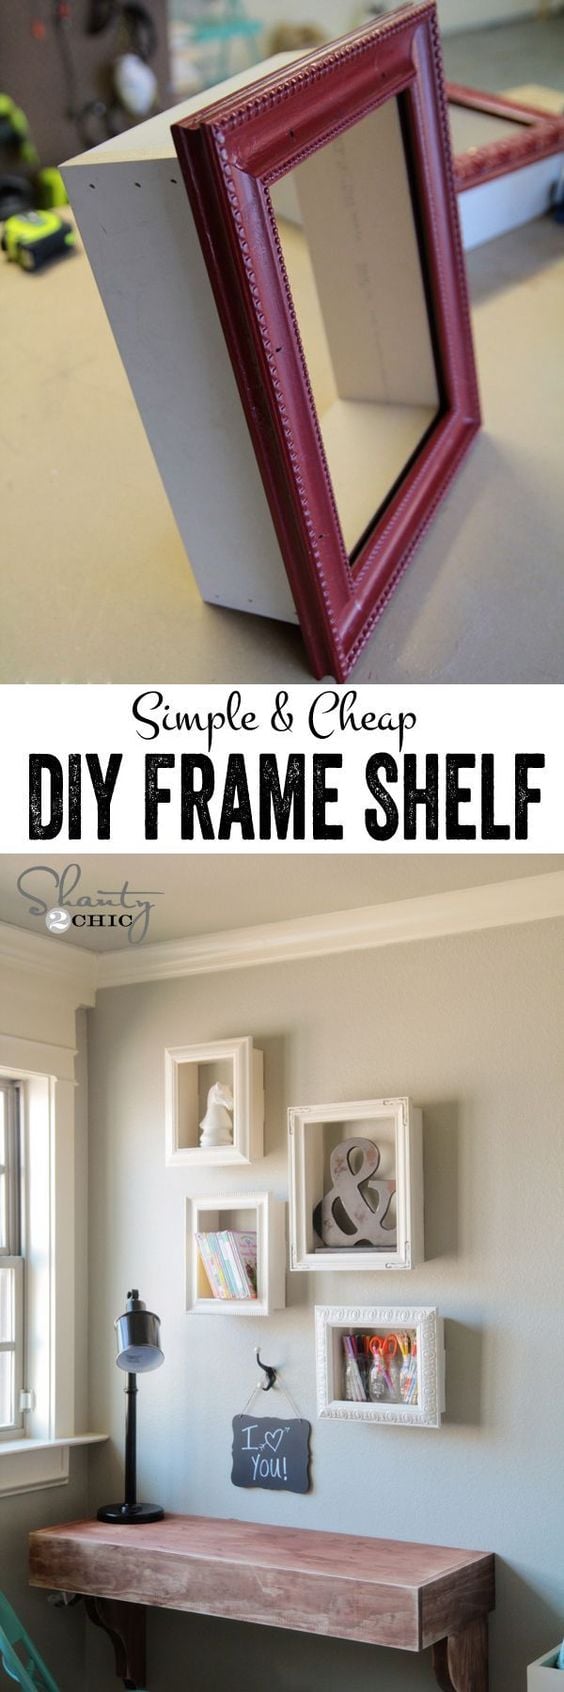 simple and cheap diy frame shelf